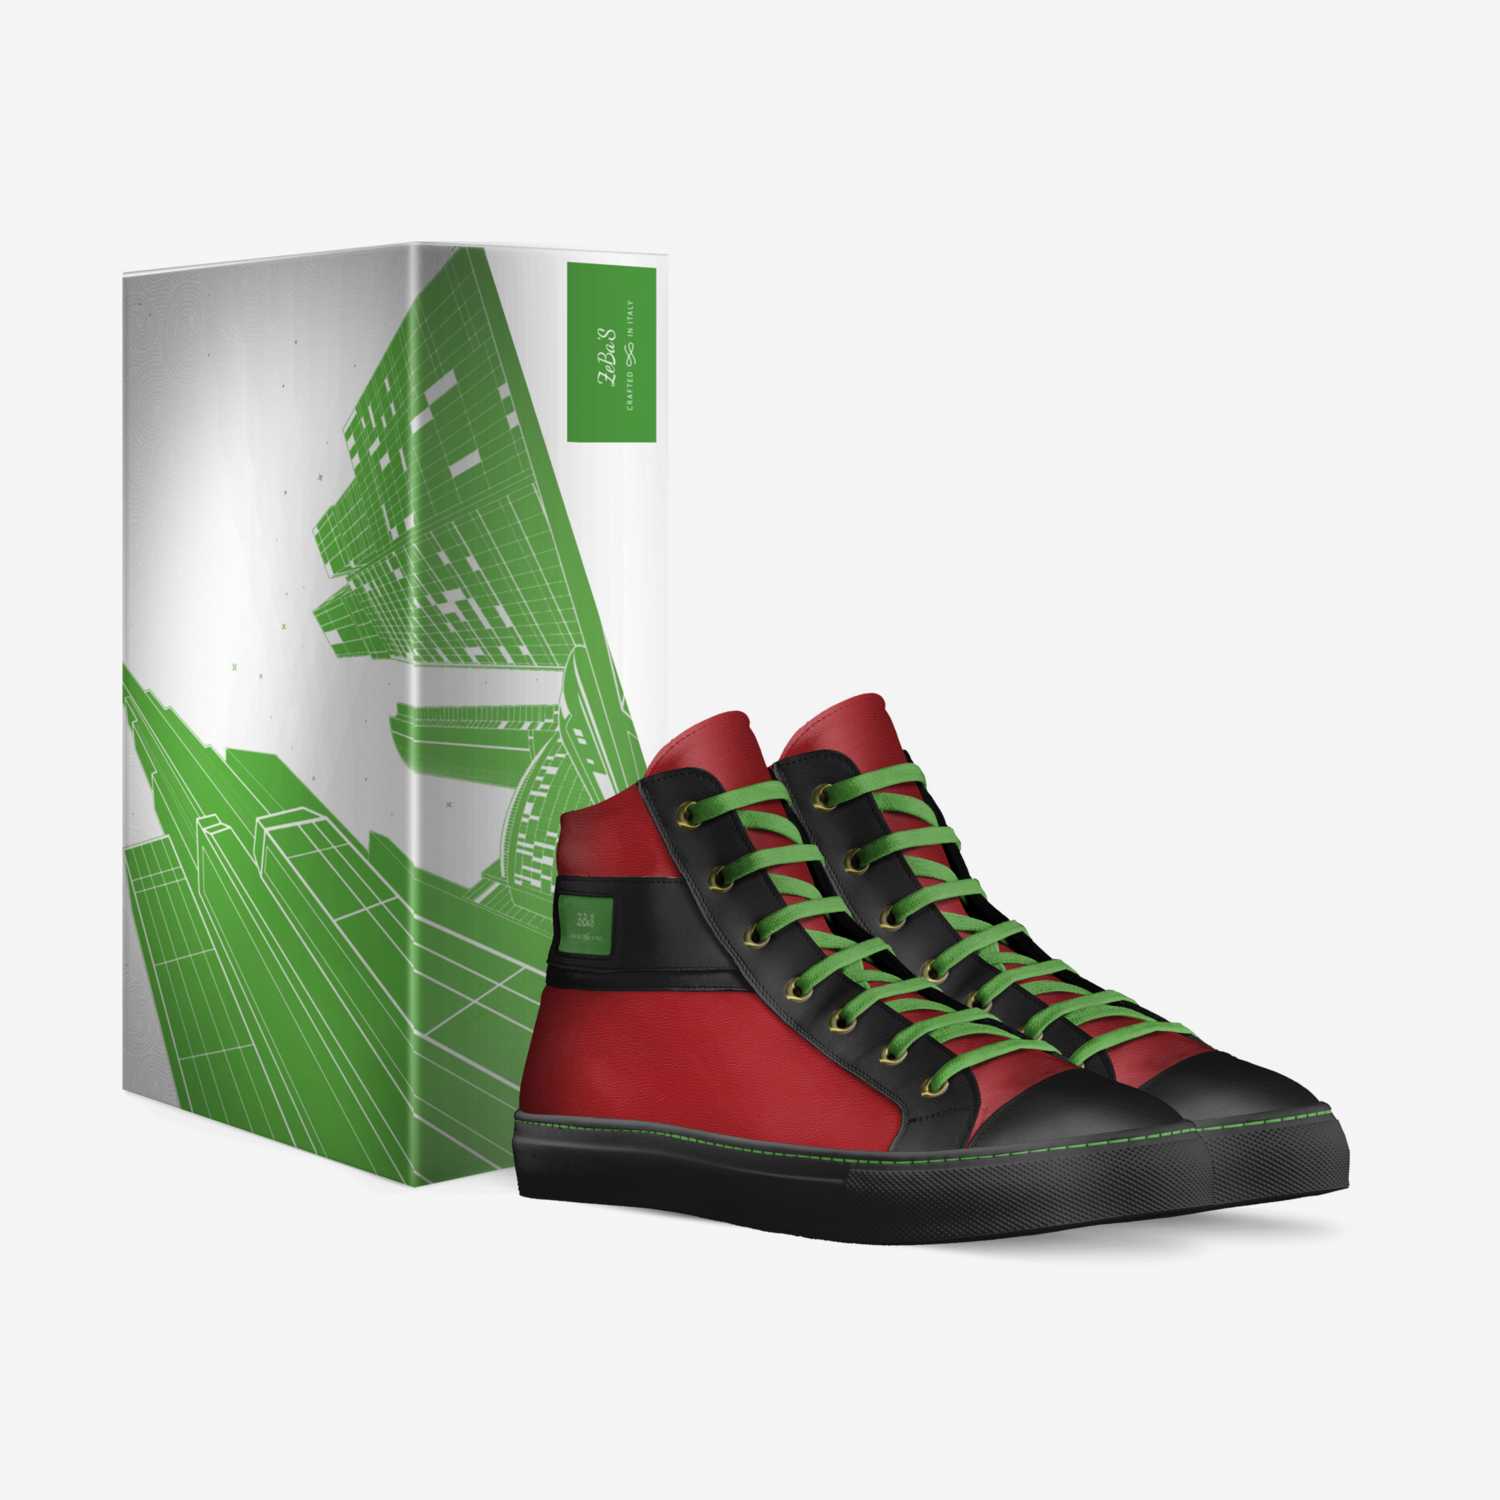 zeba 12s custom made in Italy shoes by Jestalmanaigo | Box view